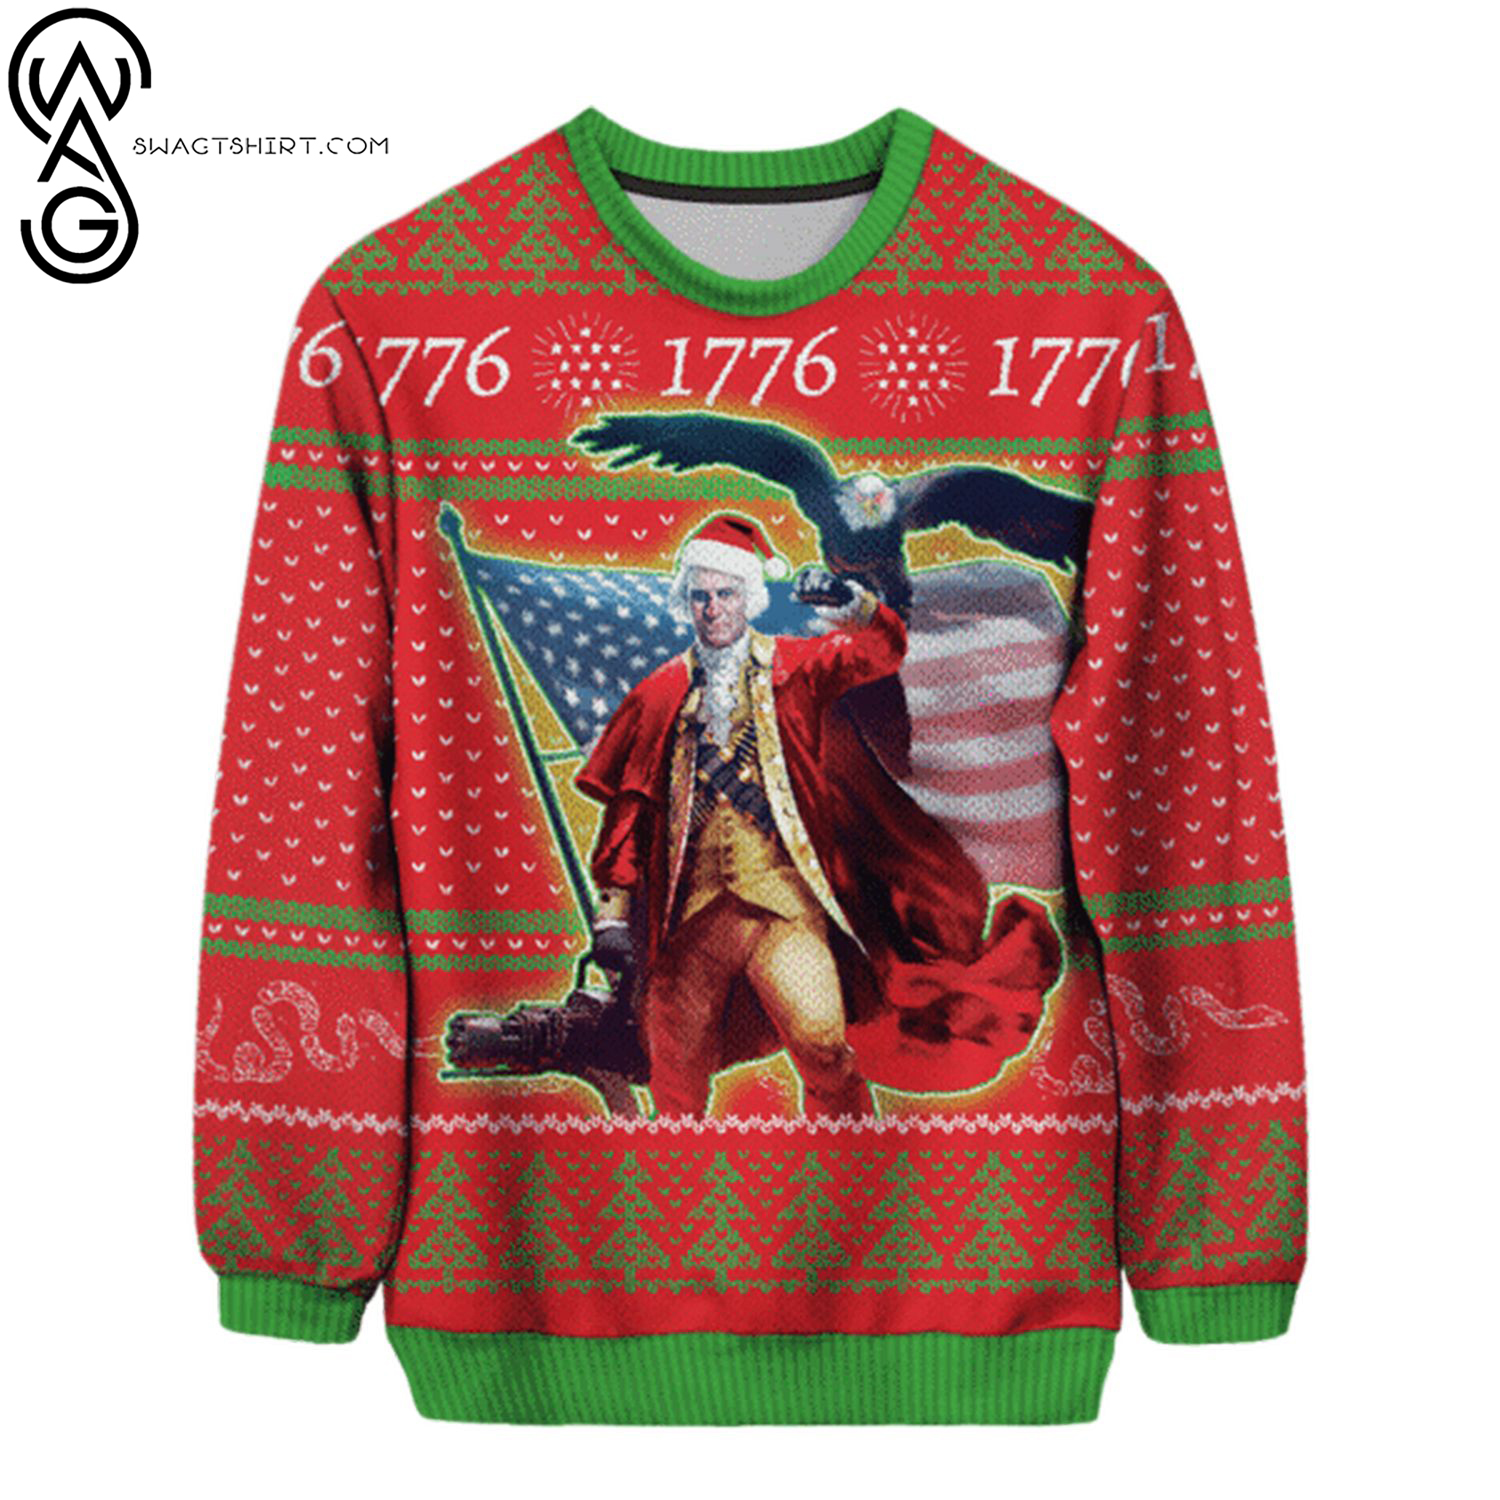 George washington 1776 full printing ugly christmas sweater